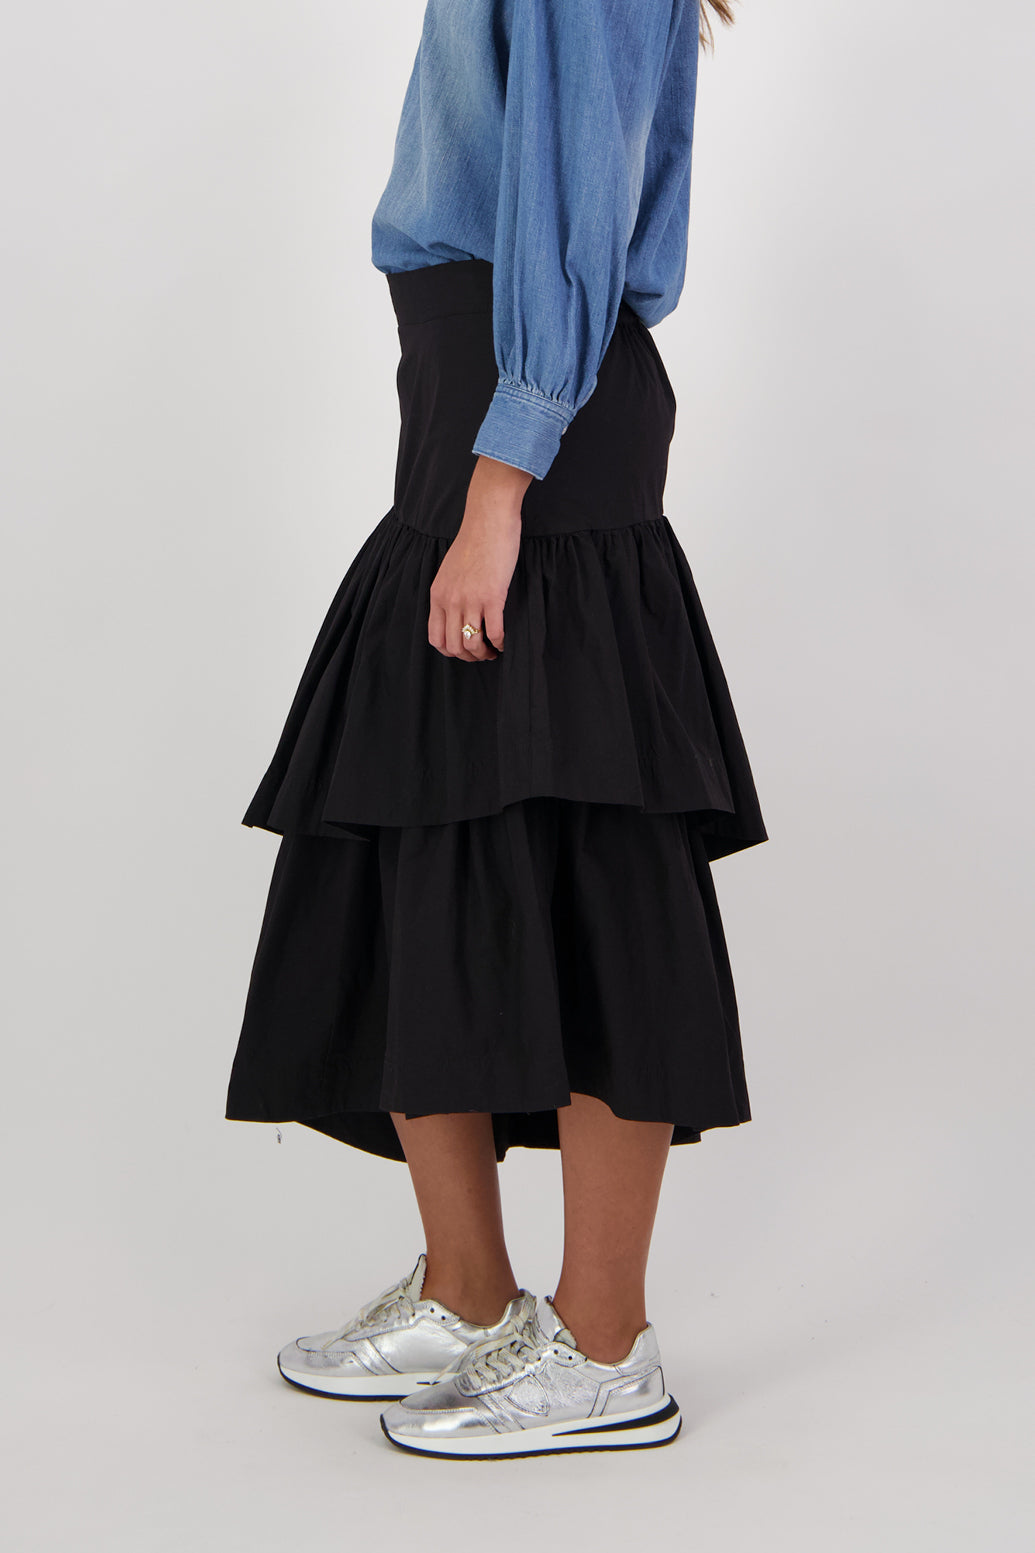 Charlotte Cotton Asymmetrical Frill Skirt - BLACK